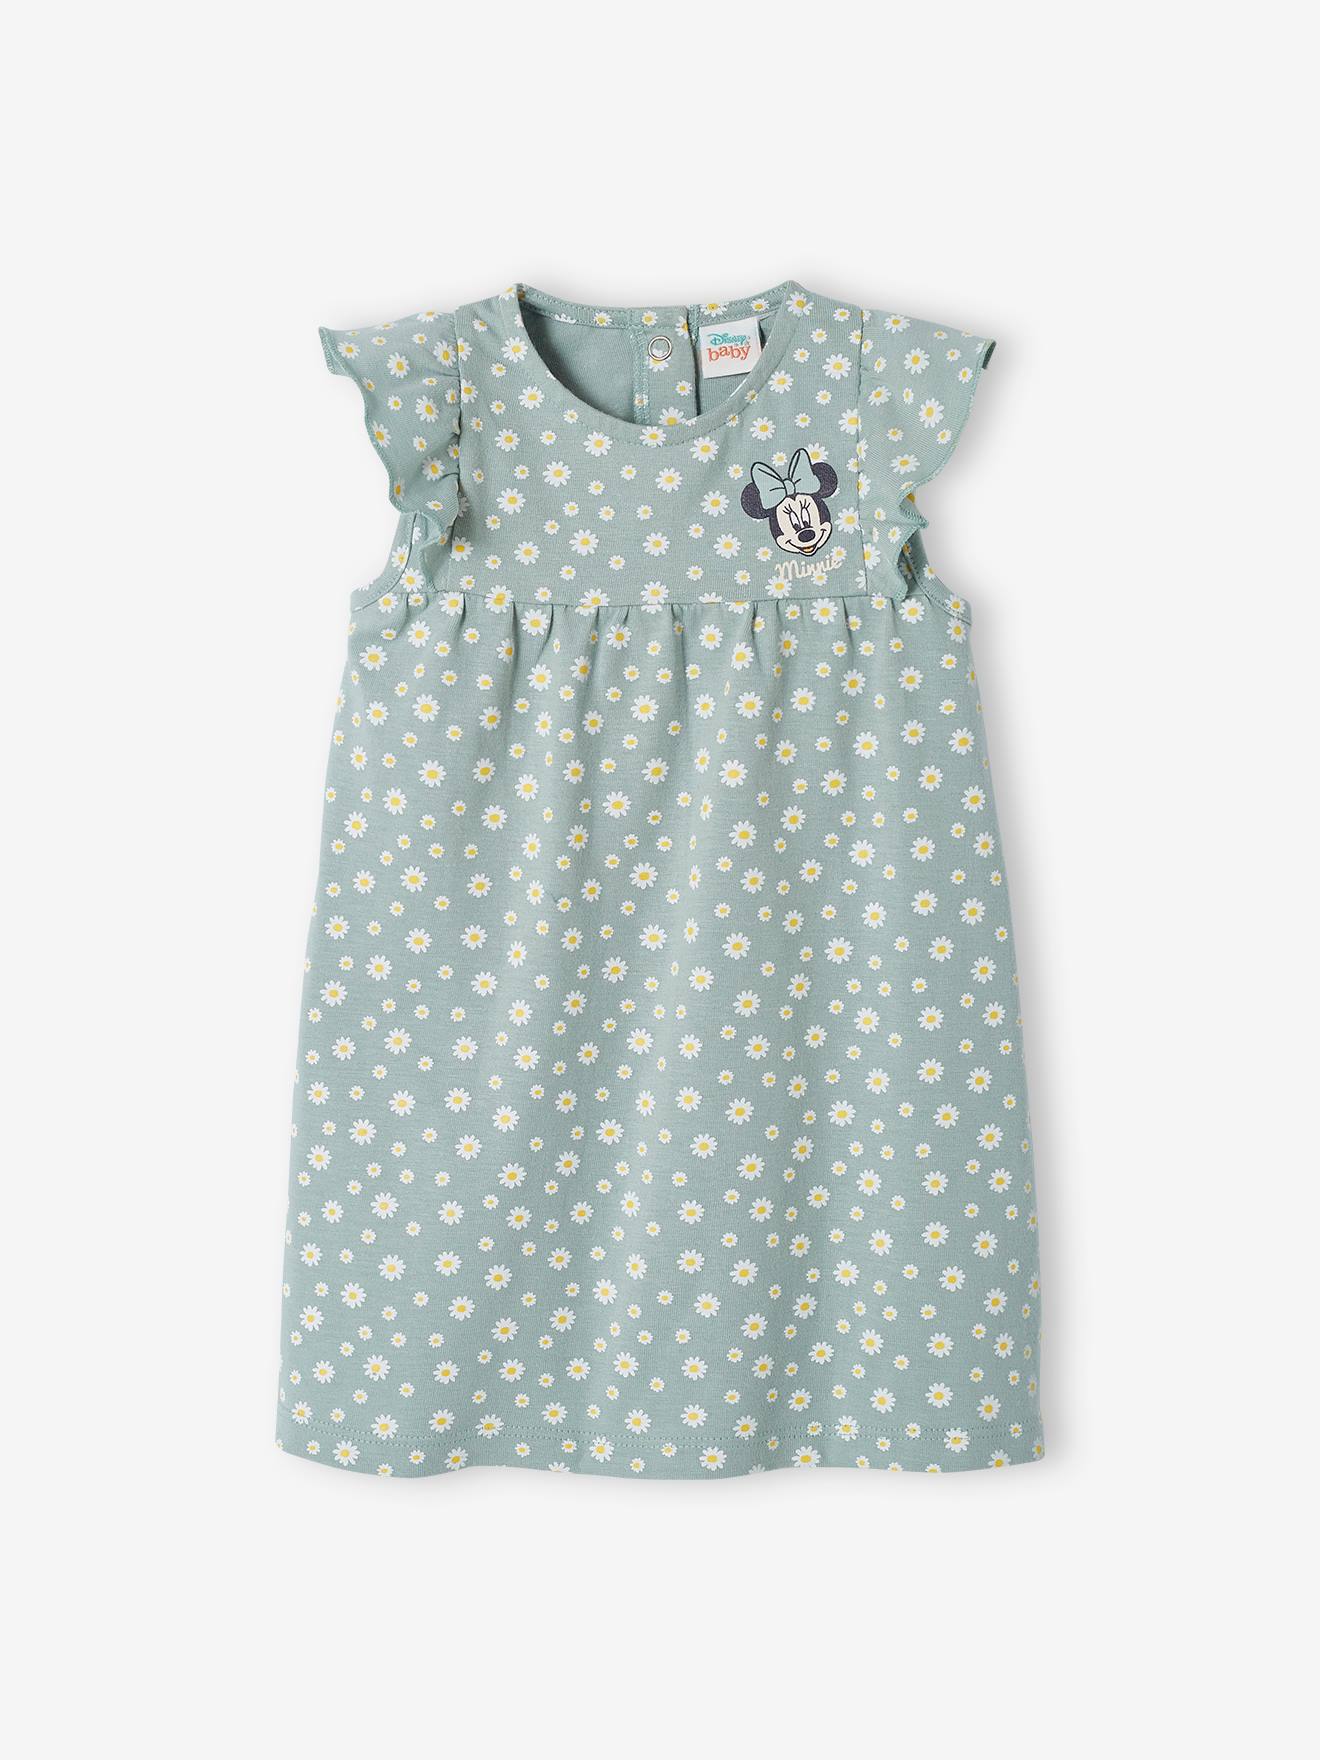 Dress for Baby Girls, Minnie Mouse by Disney(r) aqua green